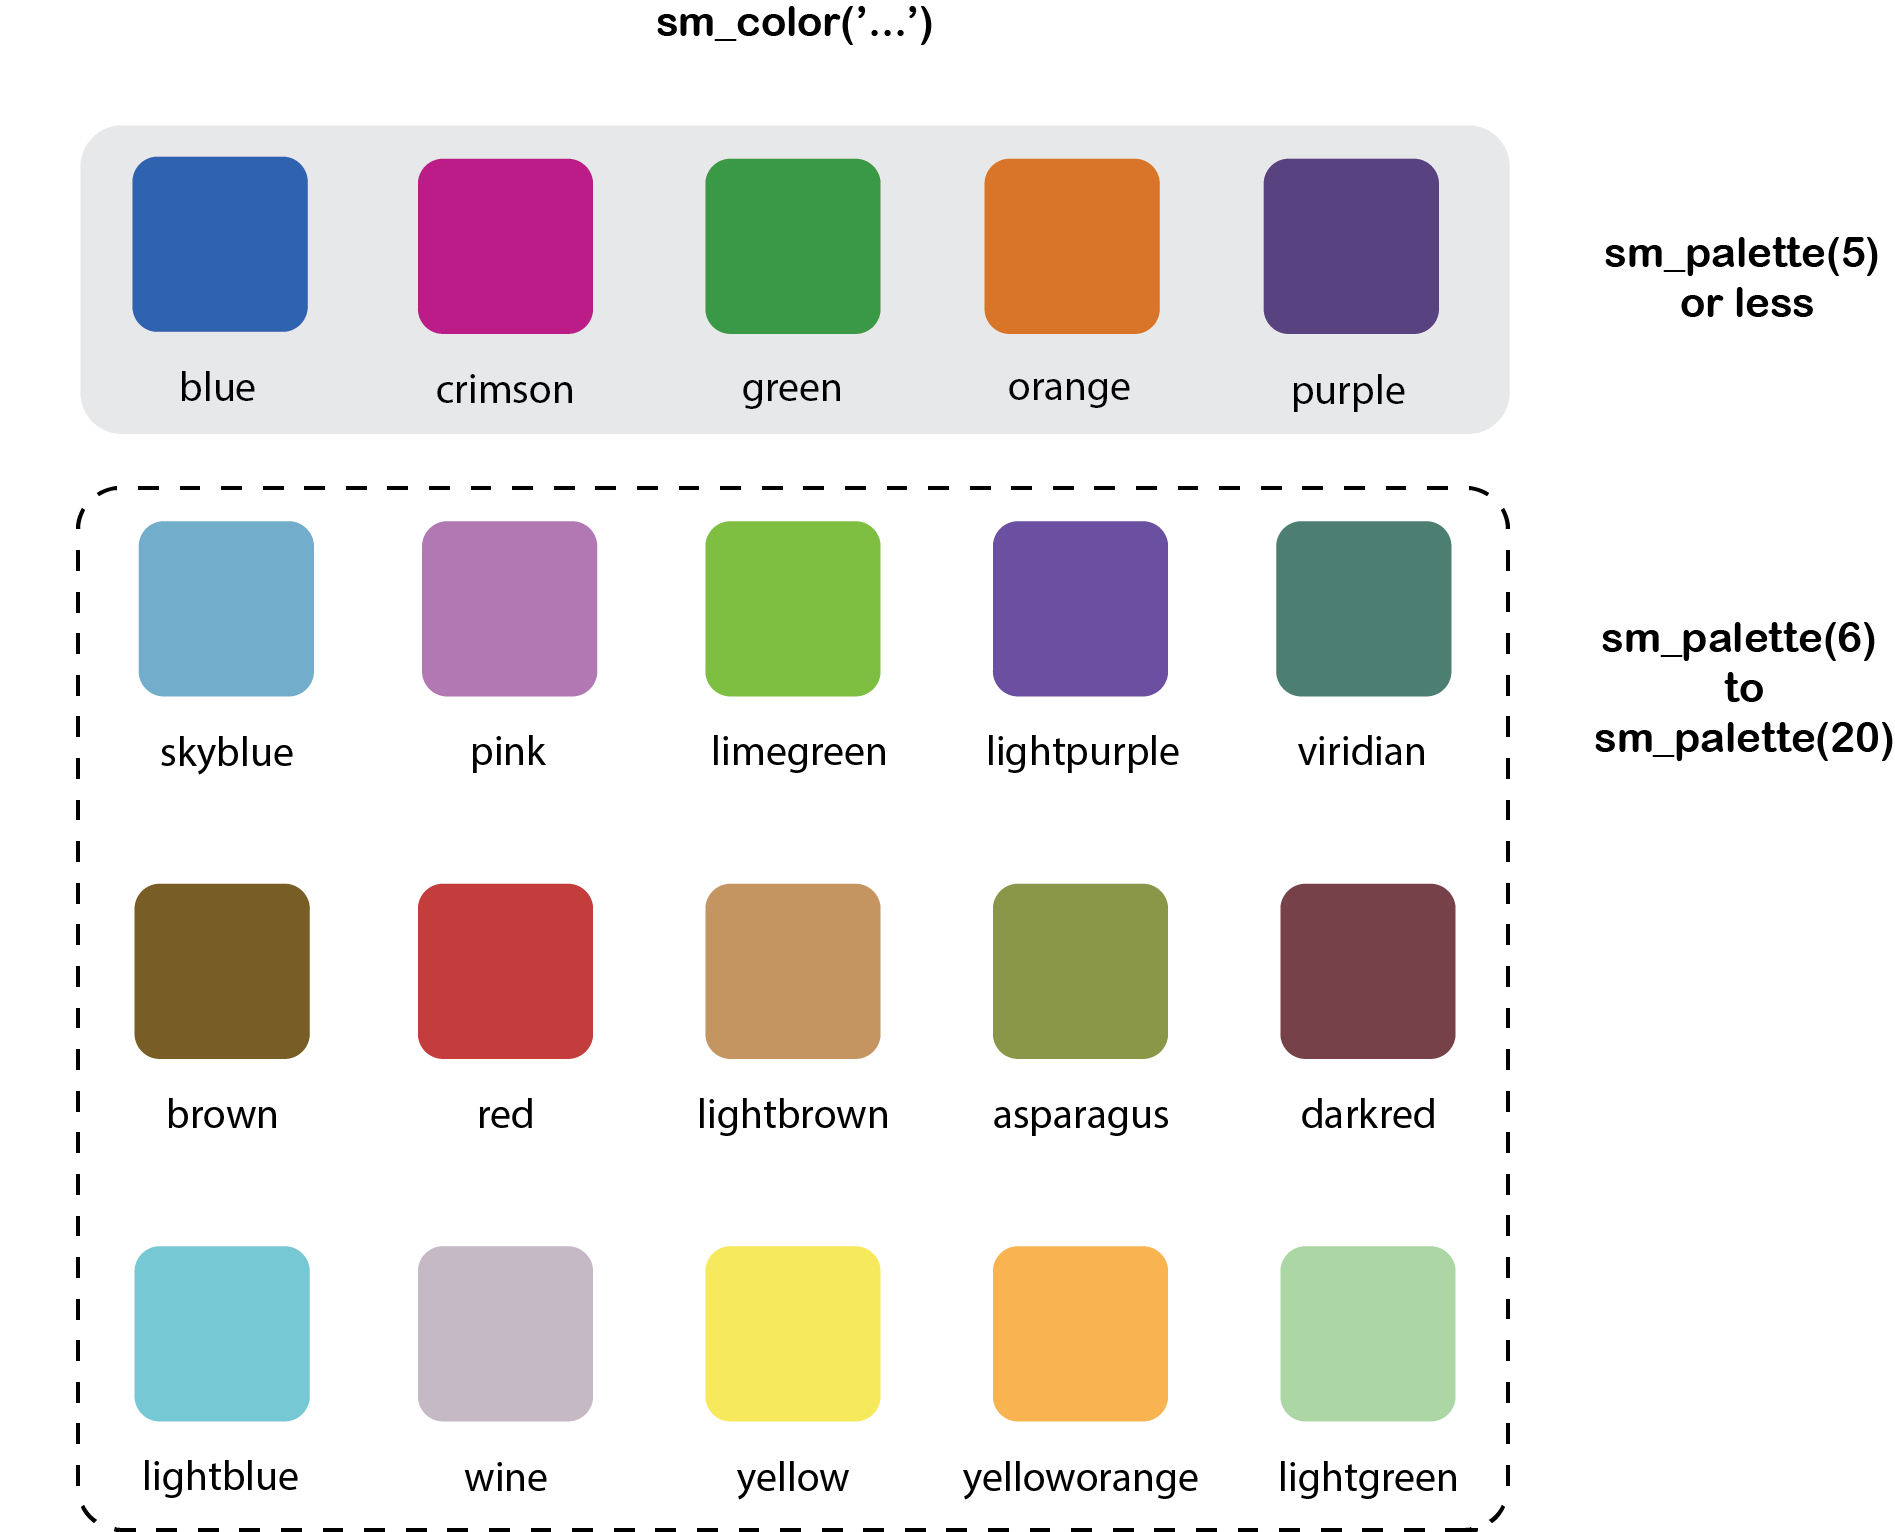 smplot2's color palette